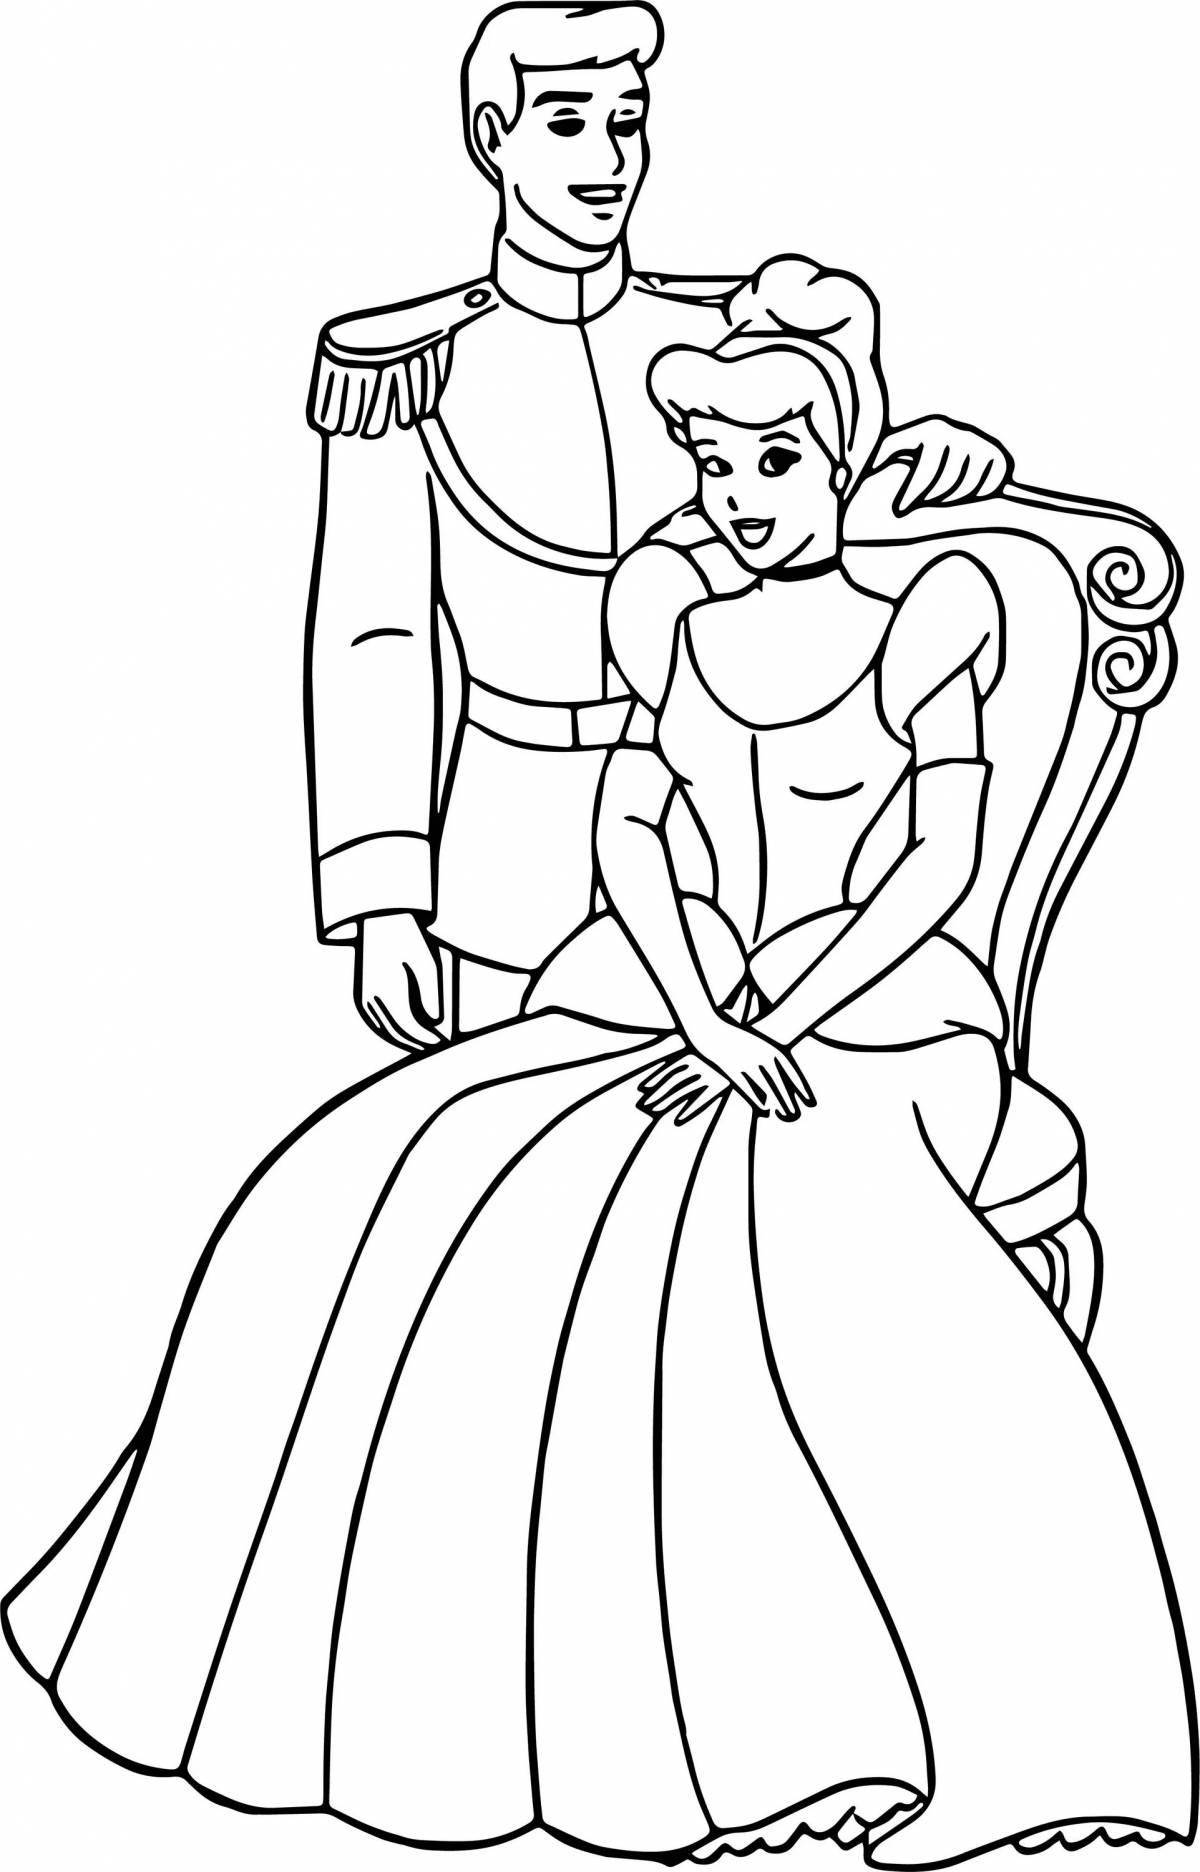 Coloring page elegant cinderella and prince